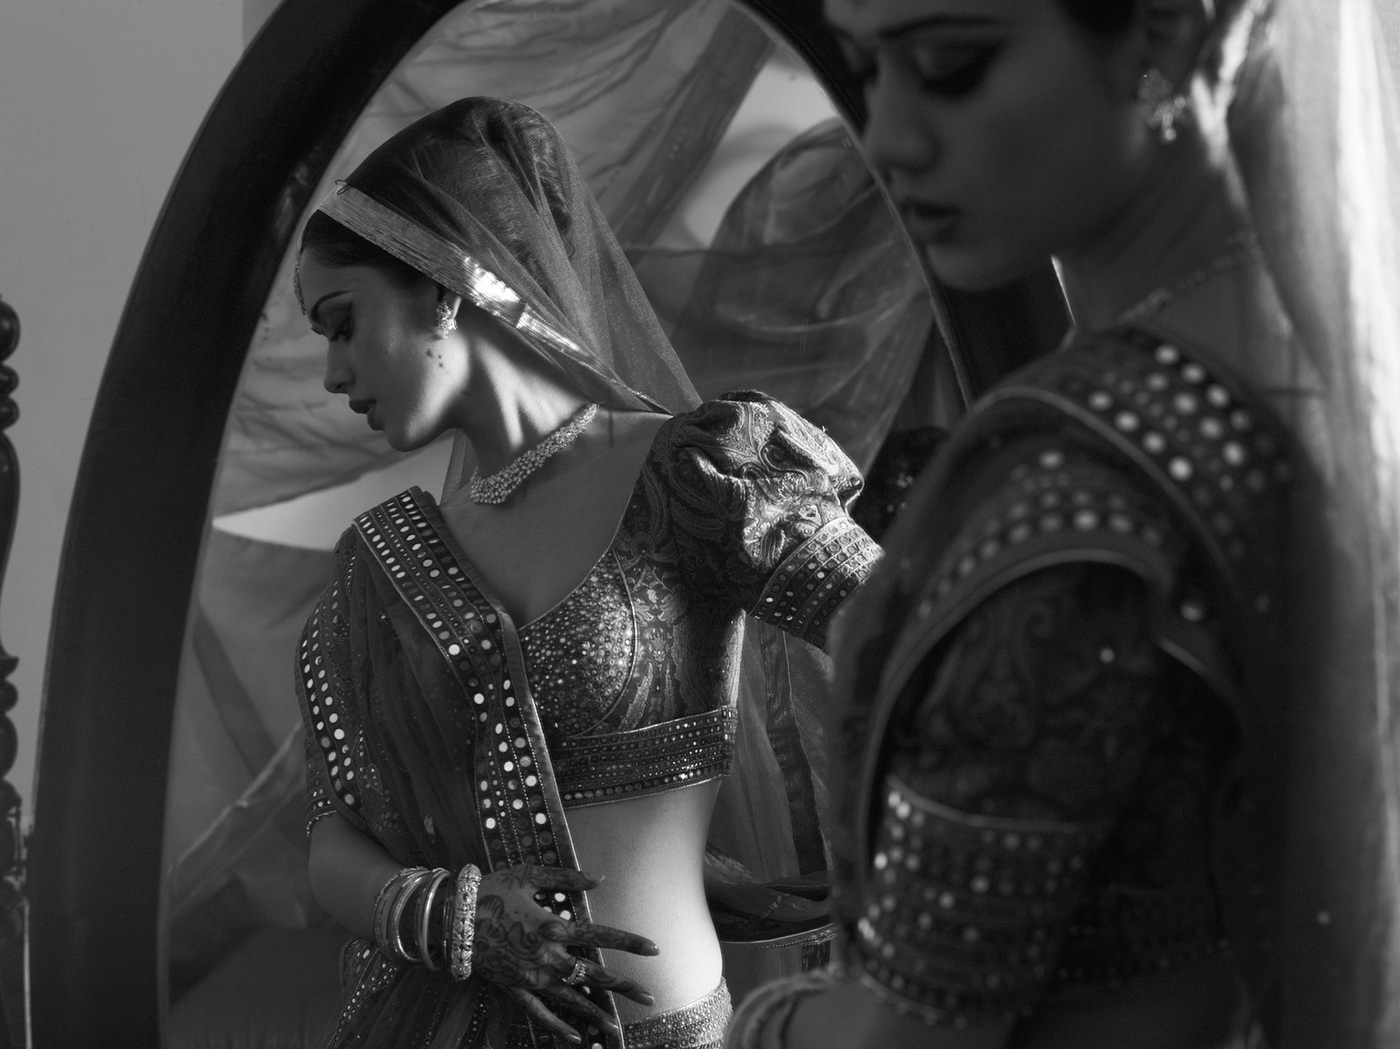 wedding marriage Jewellery gold Tanishq diamonds polki kundan beauty Ethnic indian tradition customs saris mirrorwork SILK brocade woman bride bridal shringar dressing boudoir